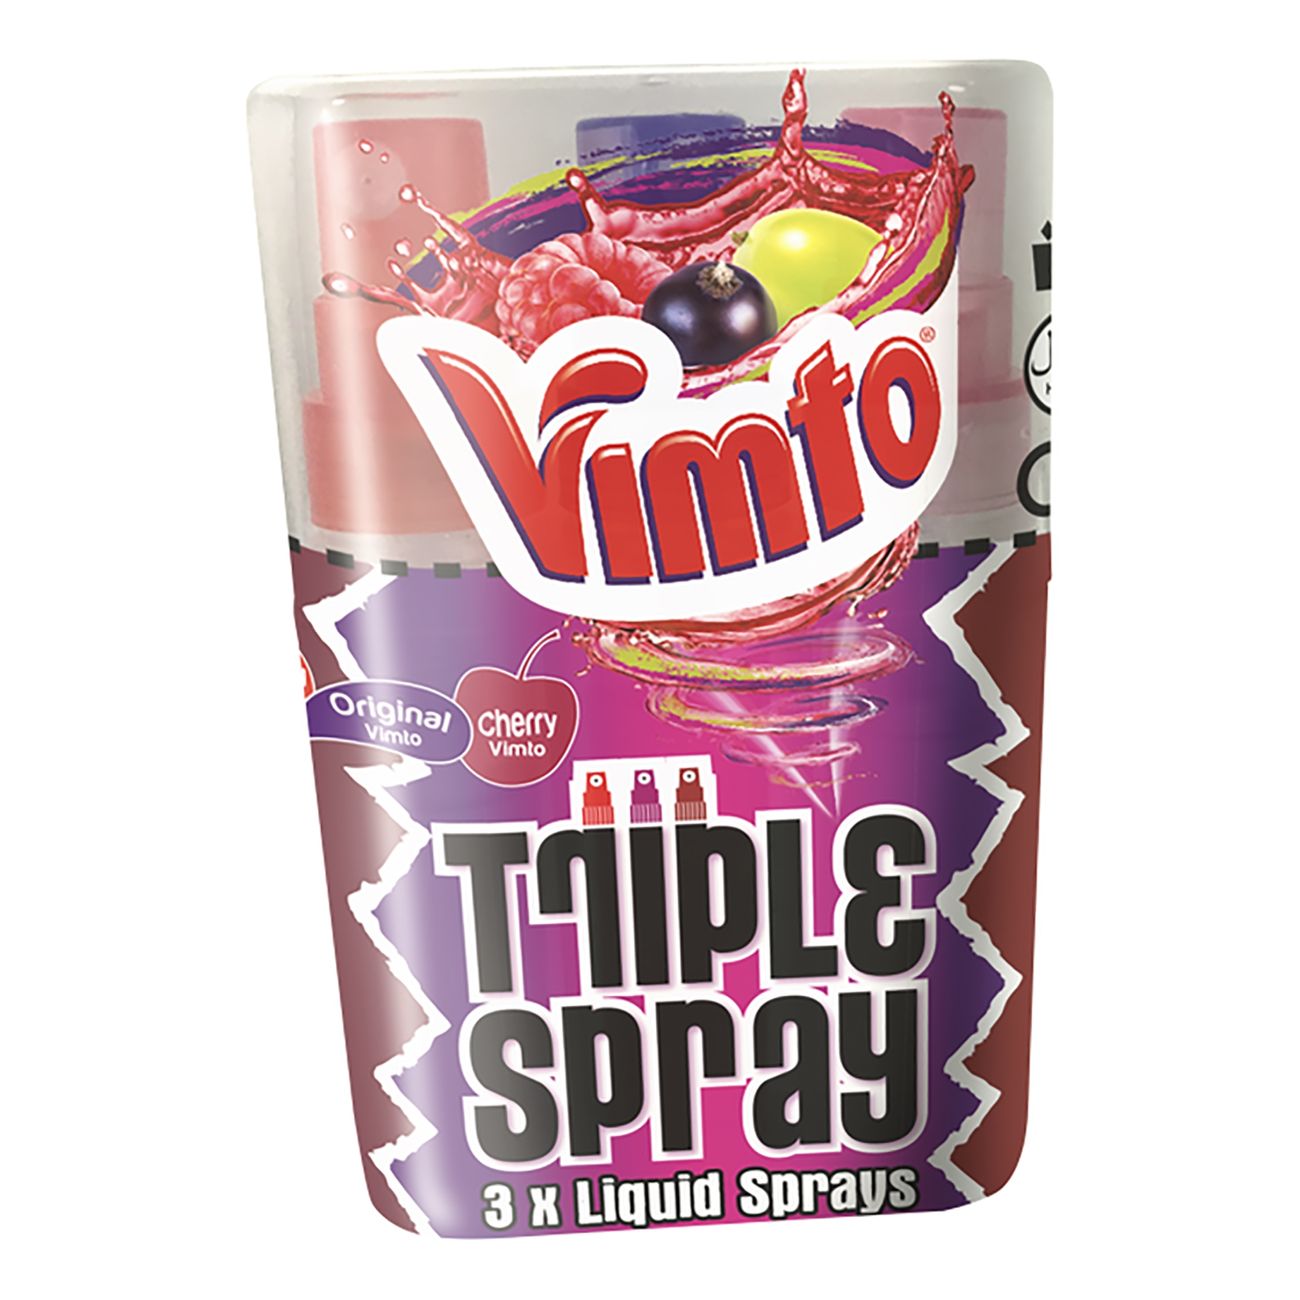 vimto-triple-spray-95401-1